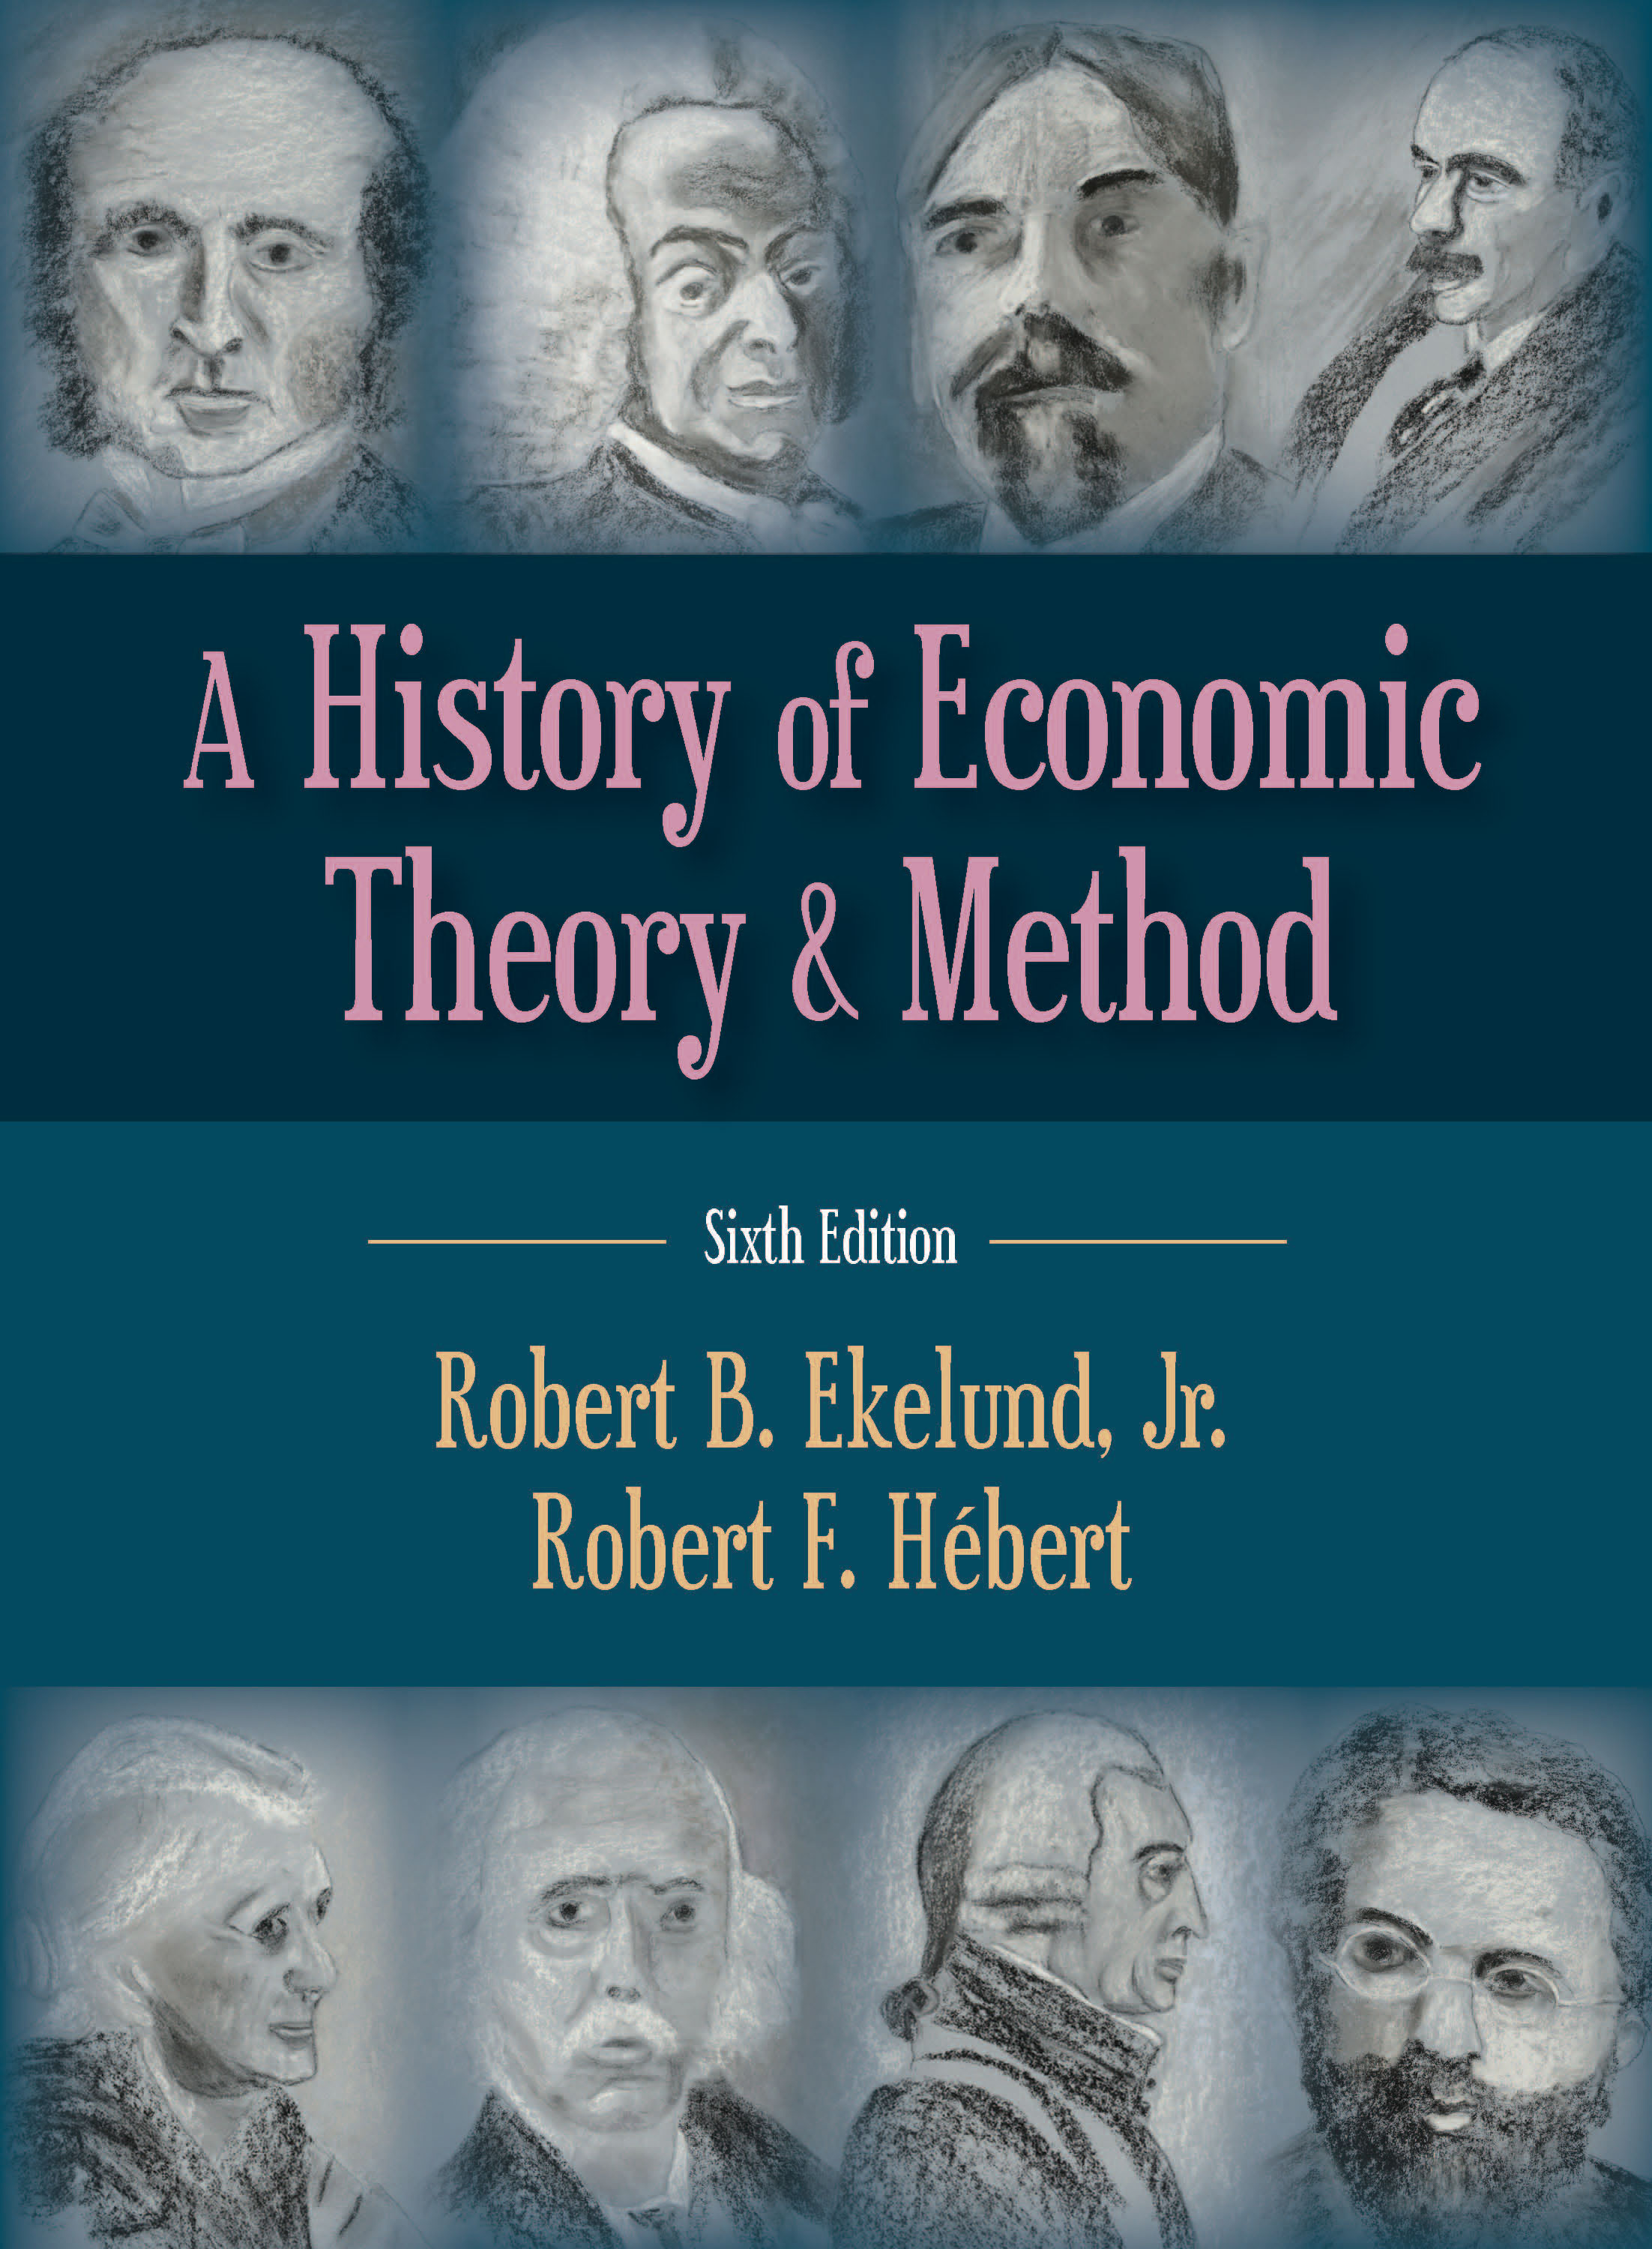 A History of Economic Theory and Method:  by Robert B. Ekelund, Jr., Robert F. Hebert